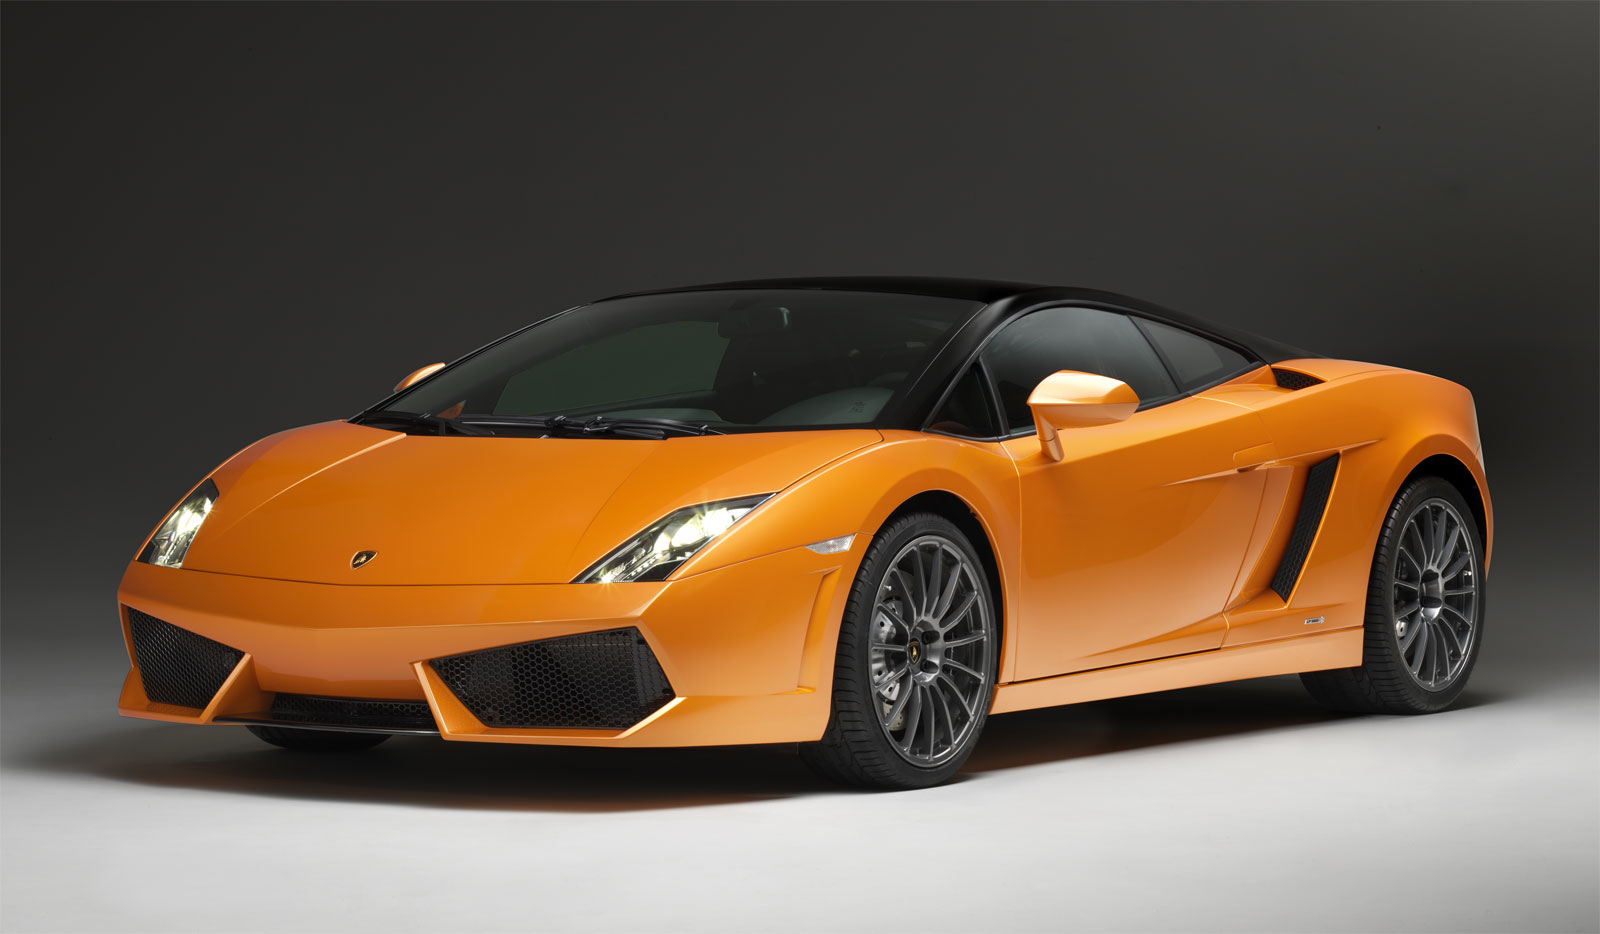 Lamborghini Sports Car Wallpaper Pictures Pics Photos Image